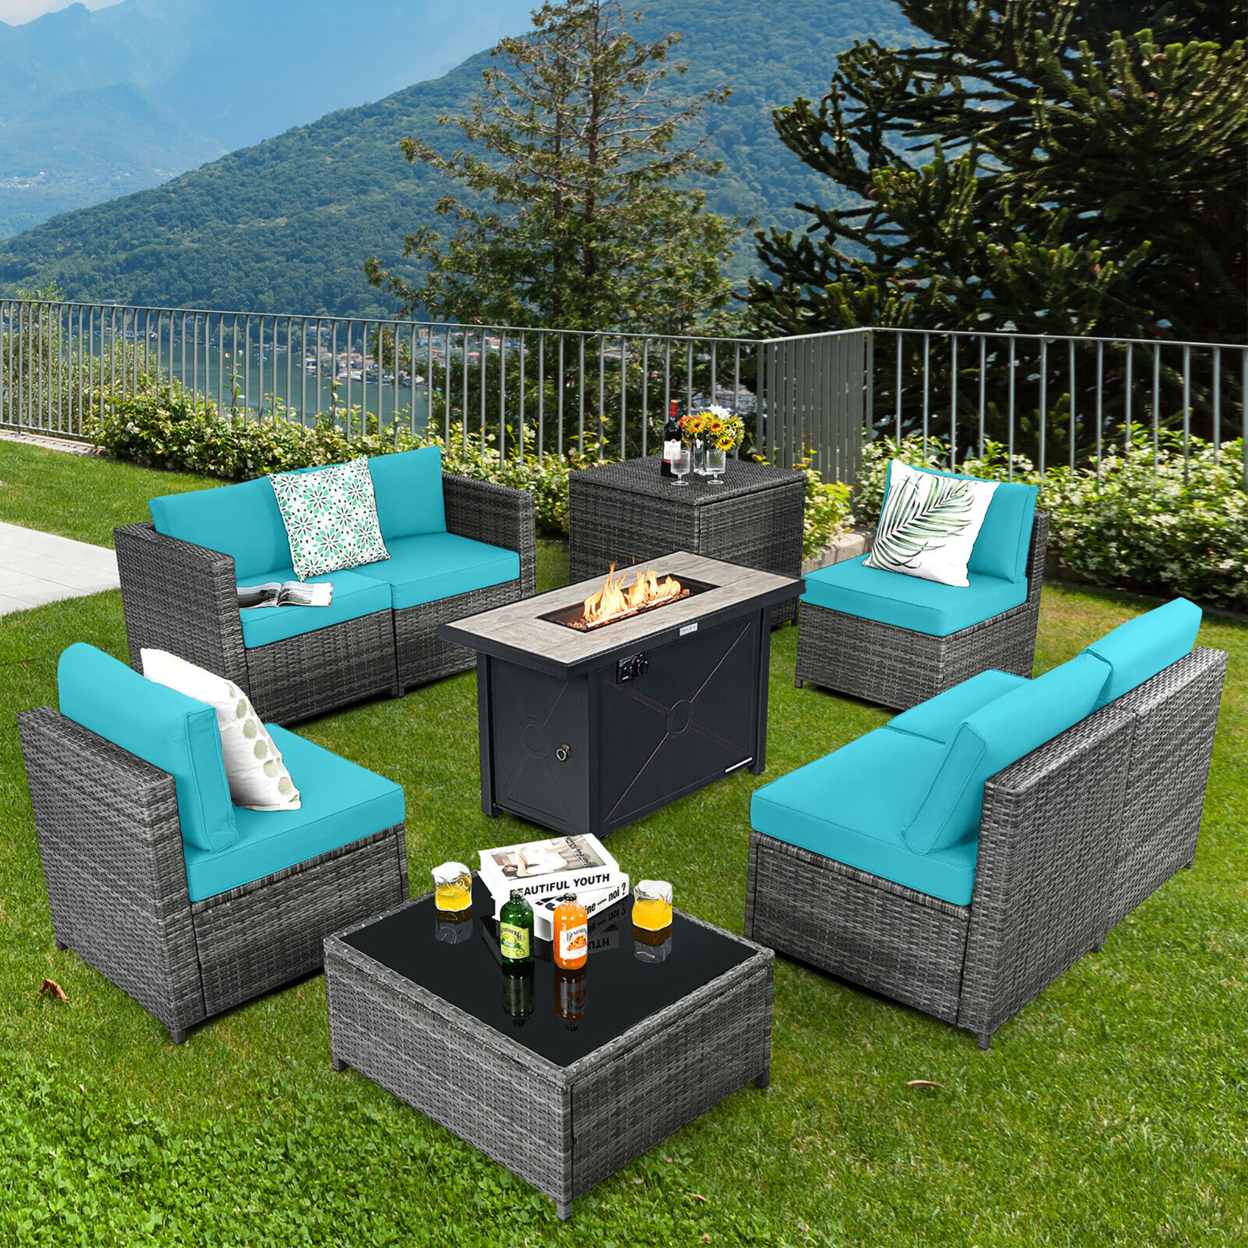 9 PCS Patio Rattan Furniture Set Fire Pit Table Storage Black W/ Cover - Turquoise